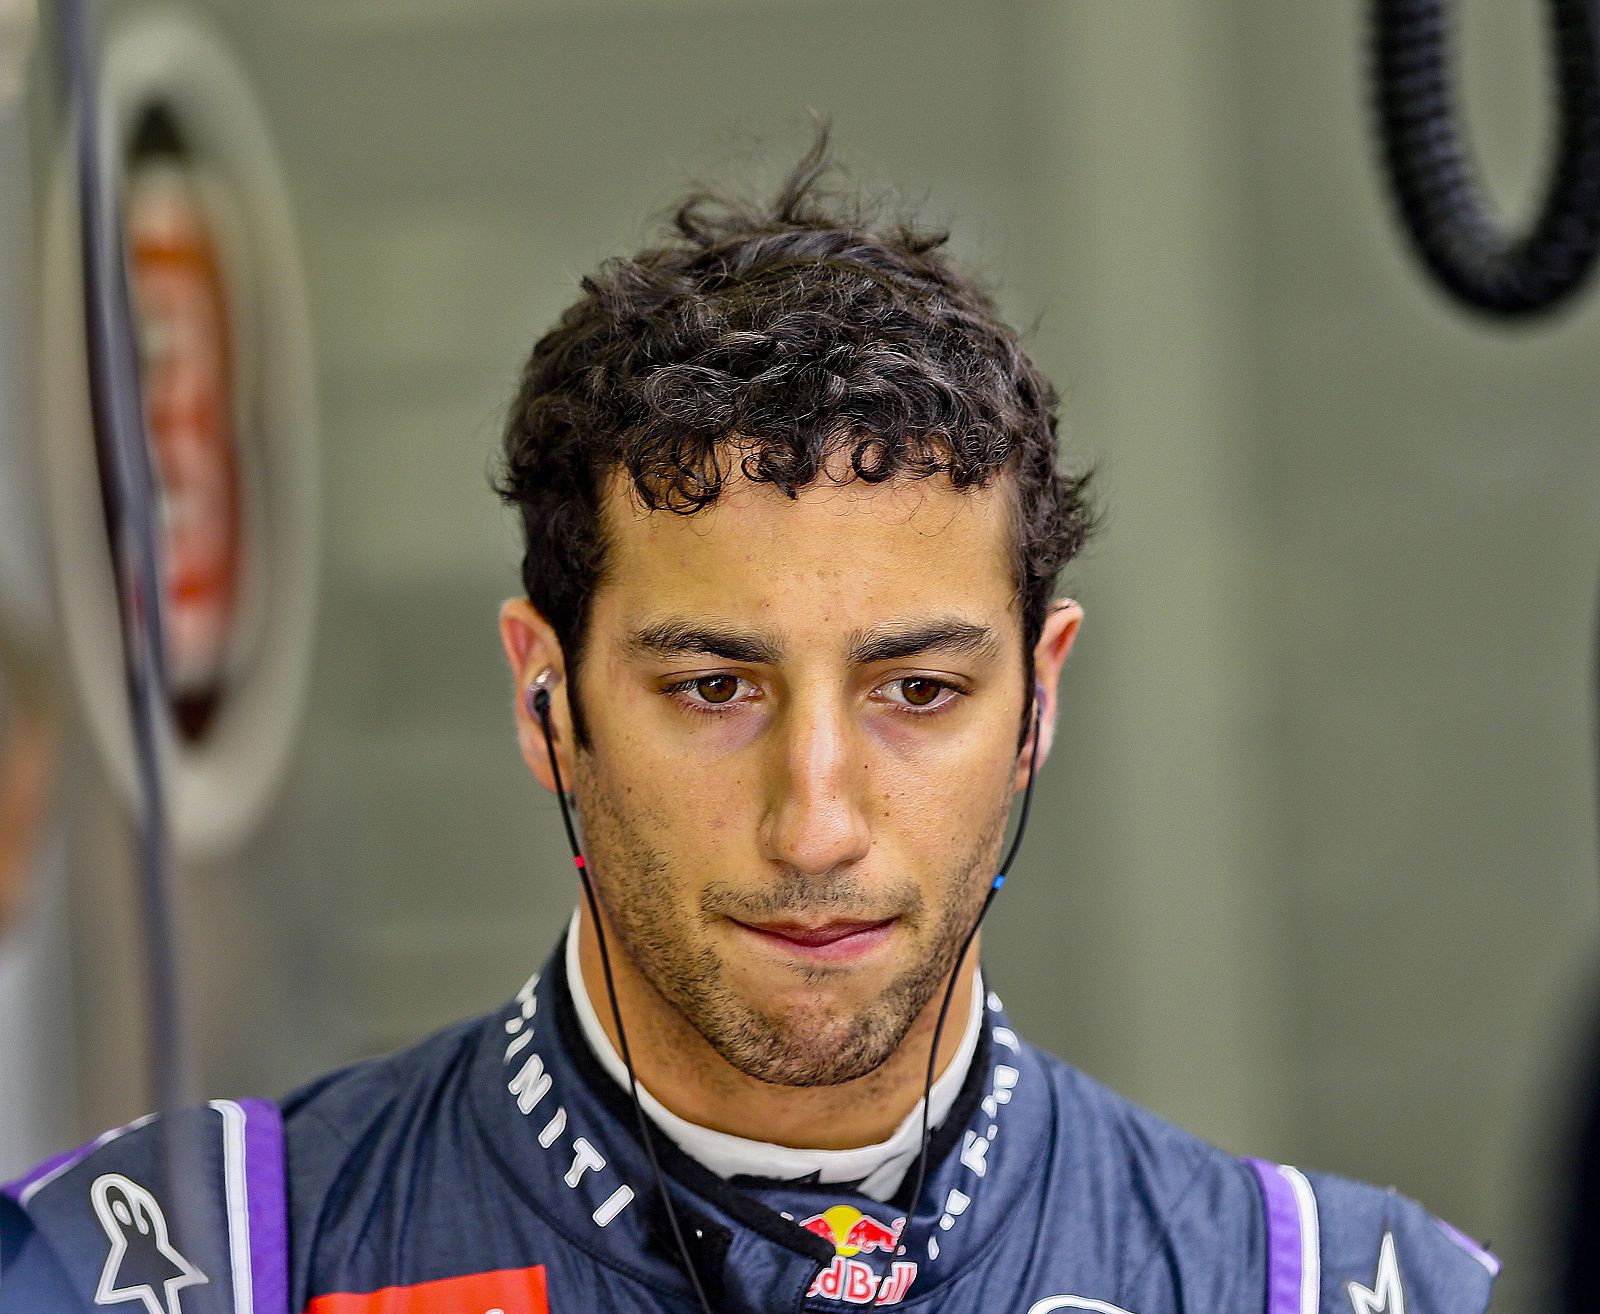 El piloto australiano de Red Bull, Daniel Ricciardo